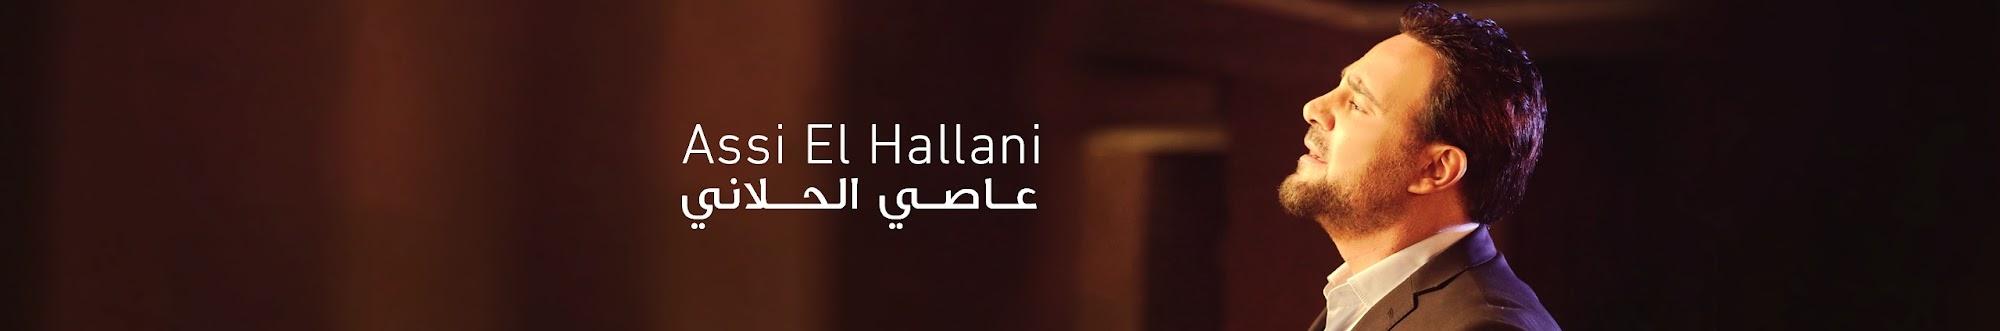 Assi El Hallani | عاصي الحلاني